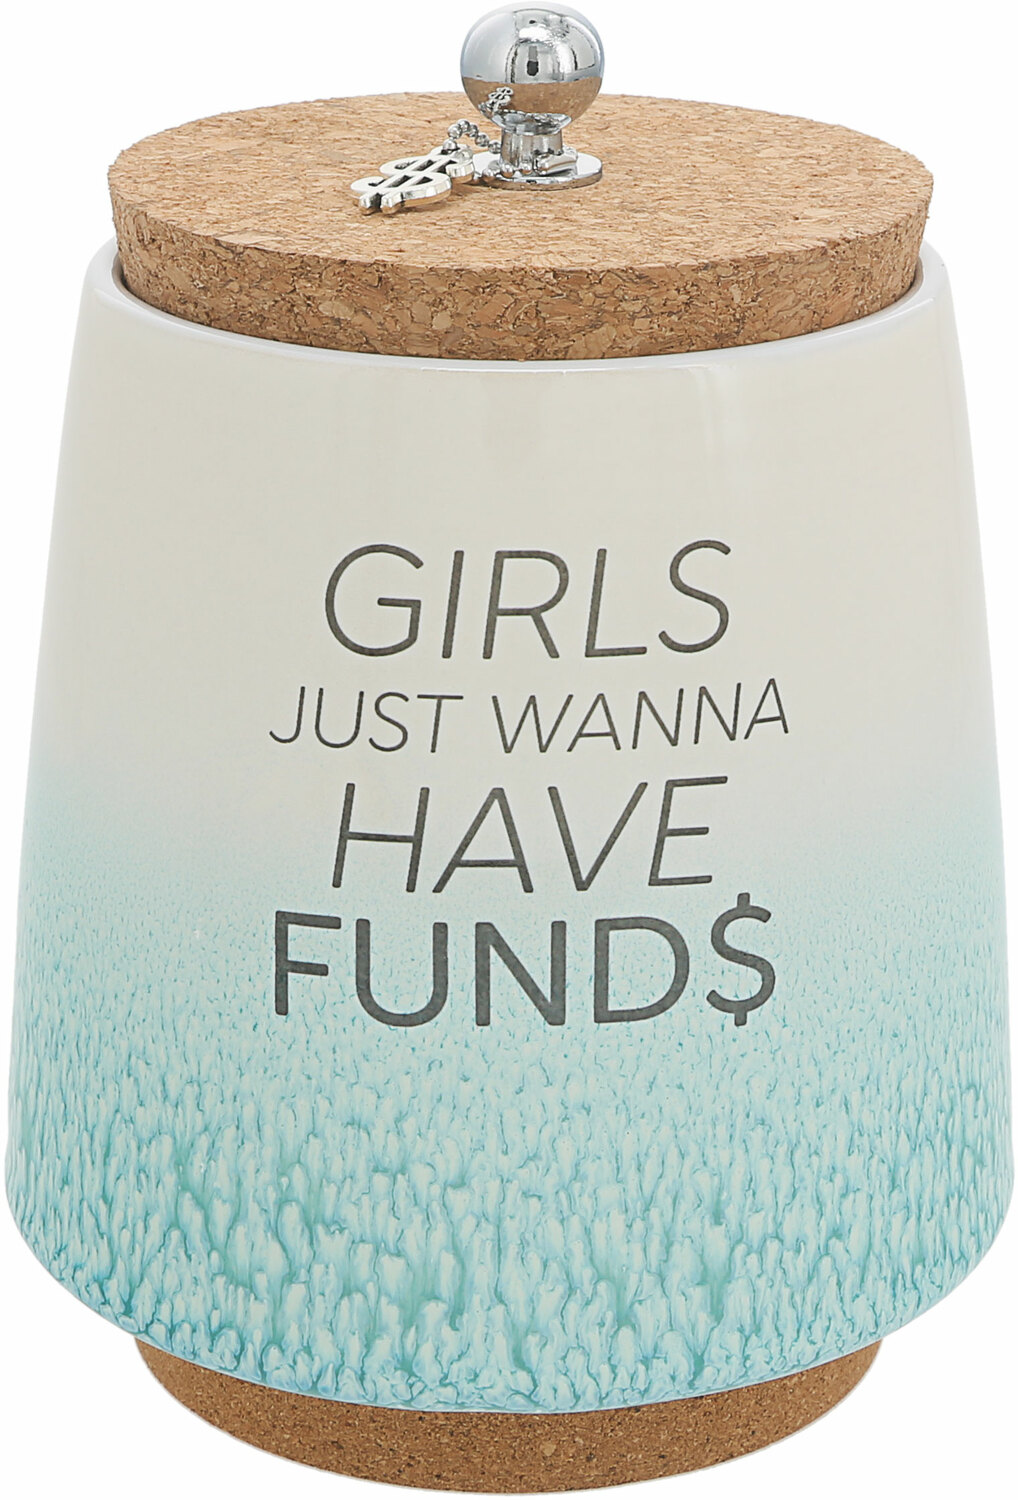 Girls by So Much Fun-d - Girls - 6.5" Ceramic Savings Bank